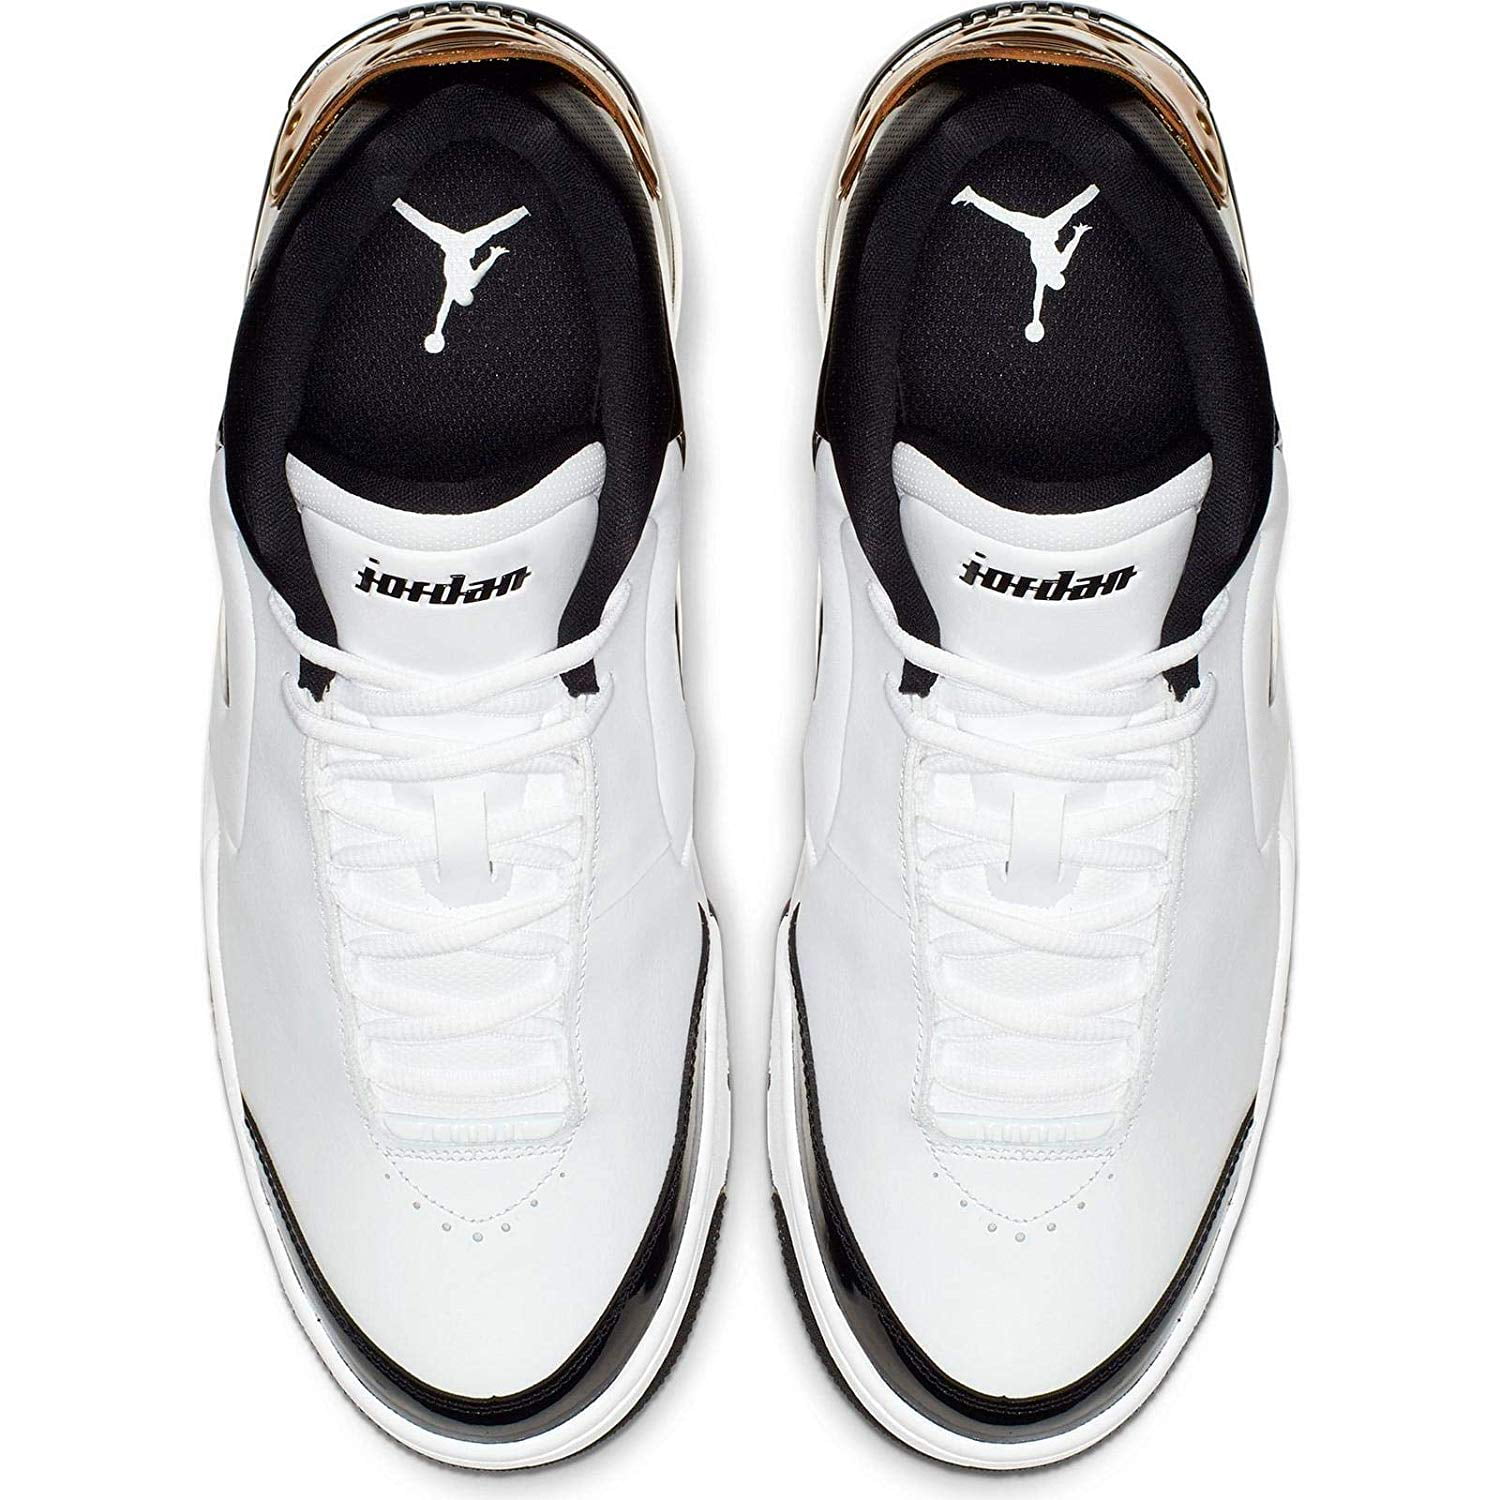 Jordan Air Big Fund Premium White Metallic Gold Black Men's Basketball Shoes Walmart.com